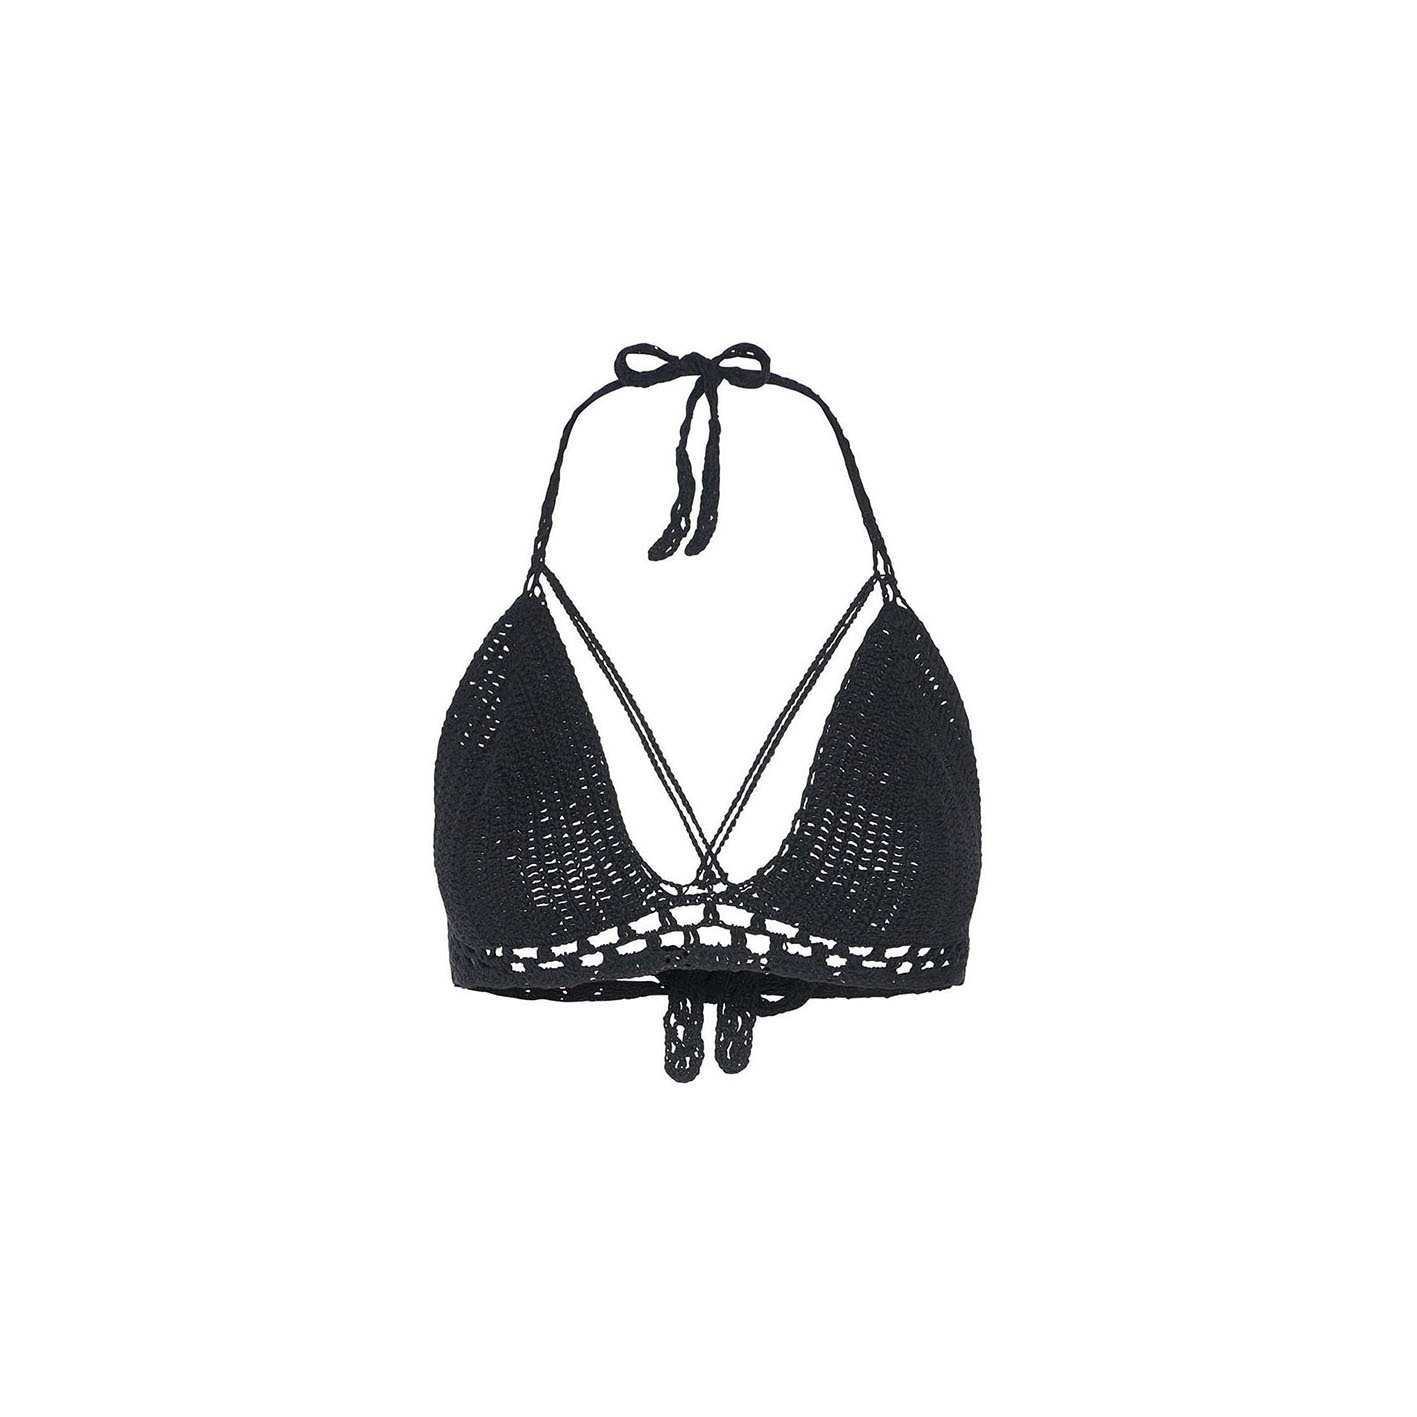 Argyle Crochet Bikini Top in Black made with pure cotton